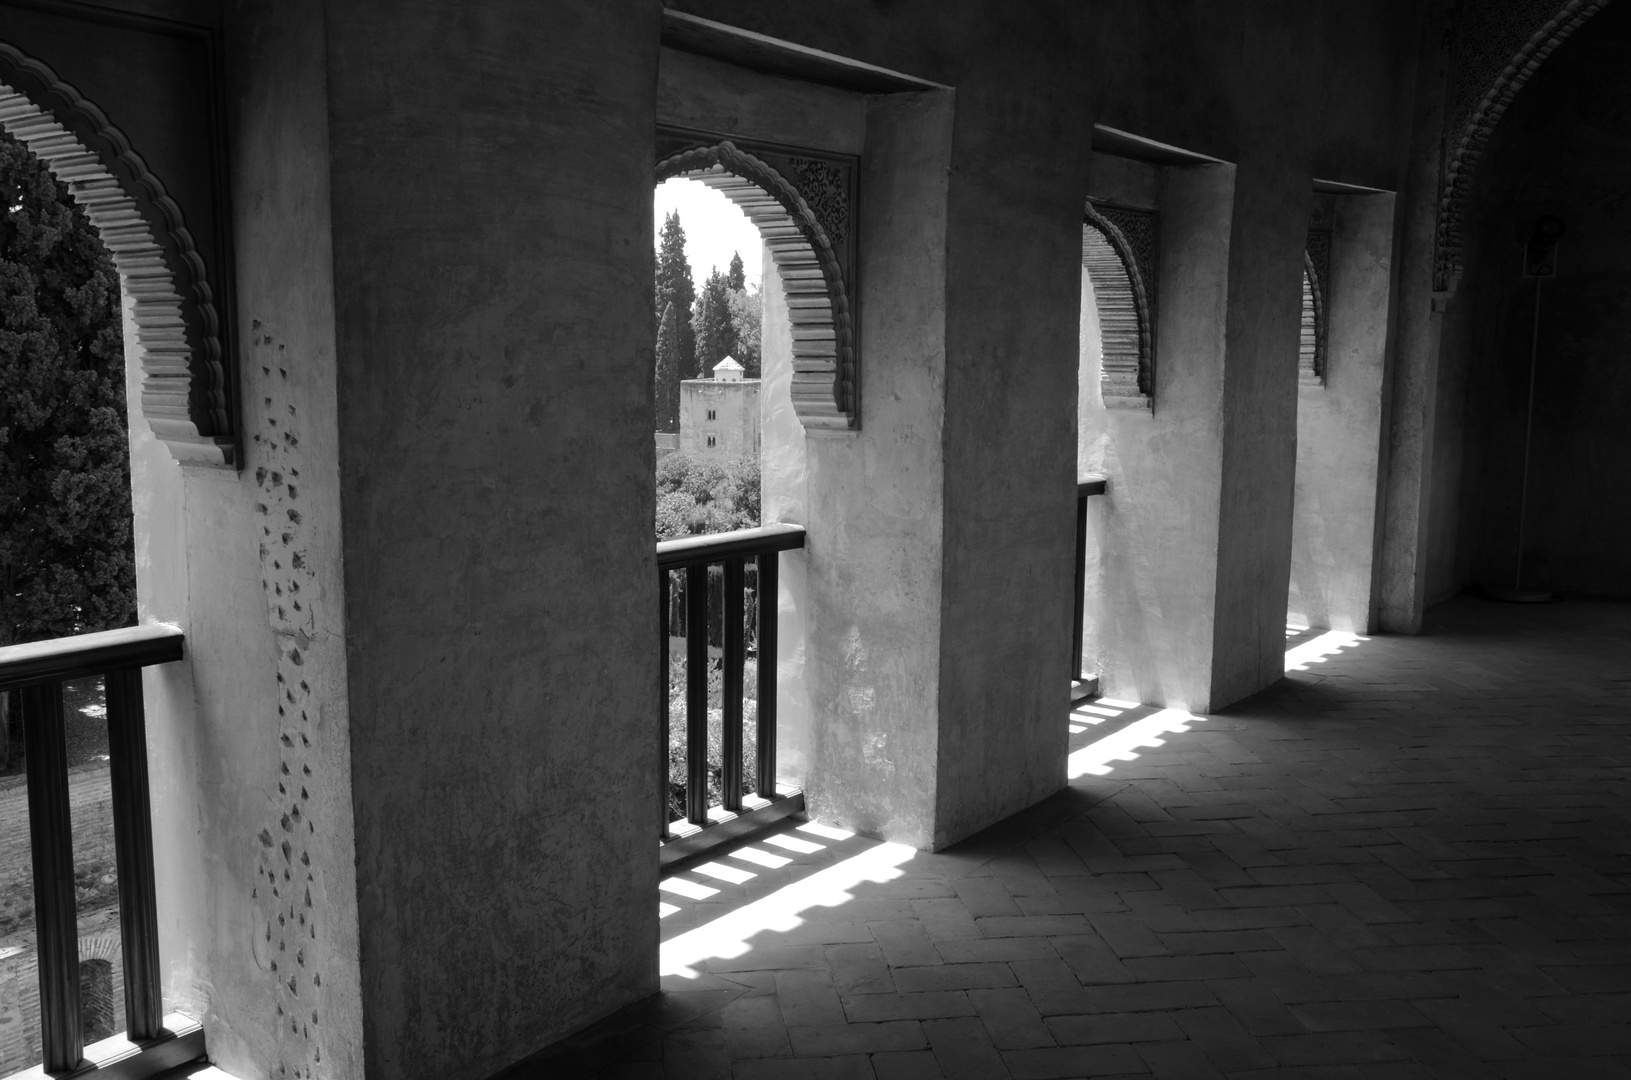 Arkadengang in der Alhambra